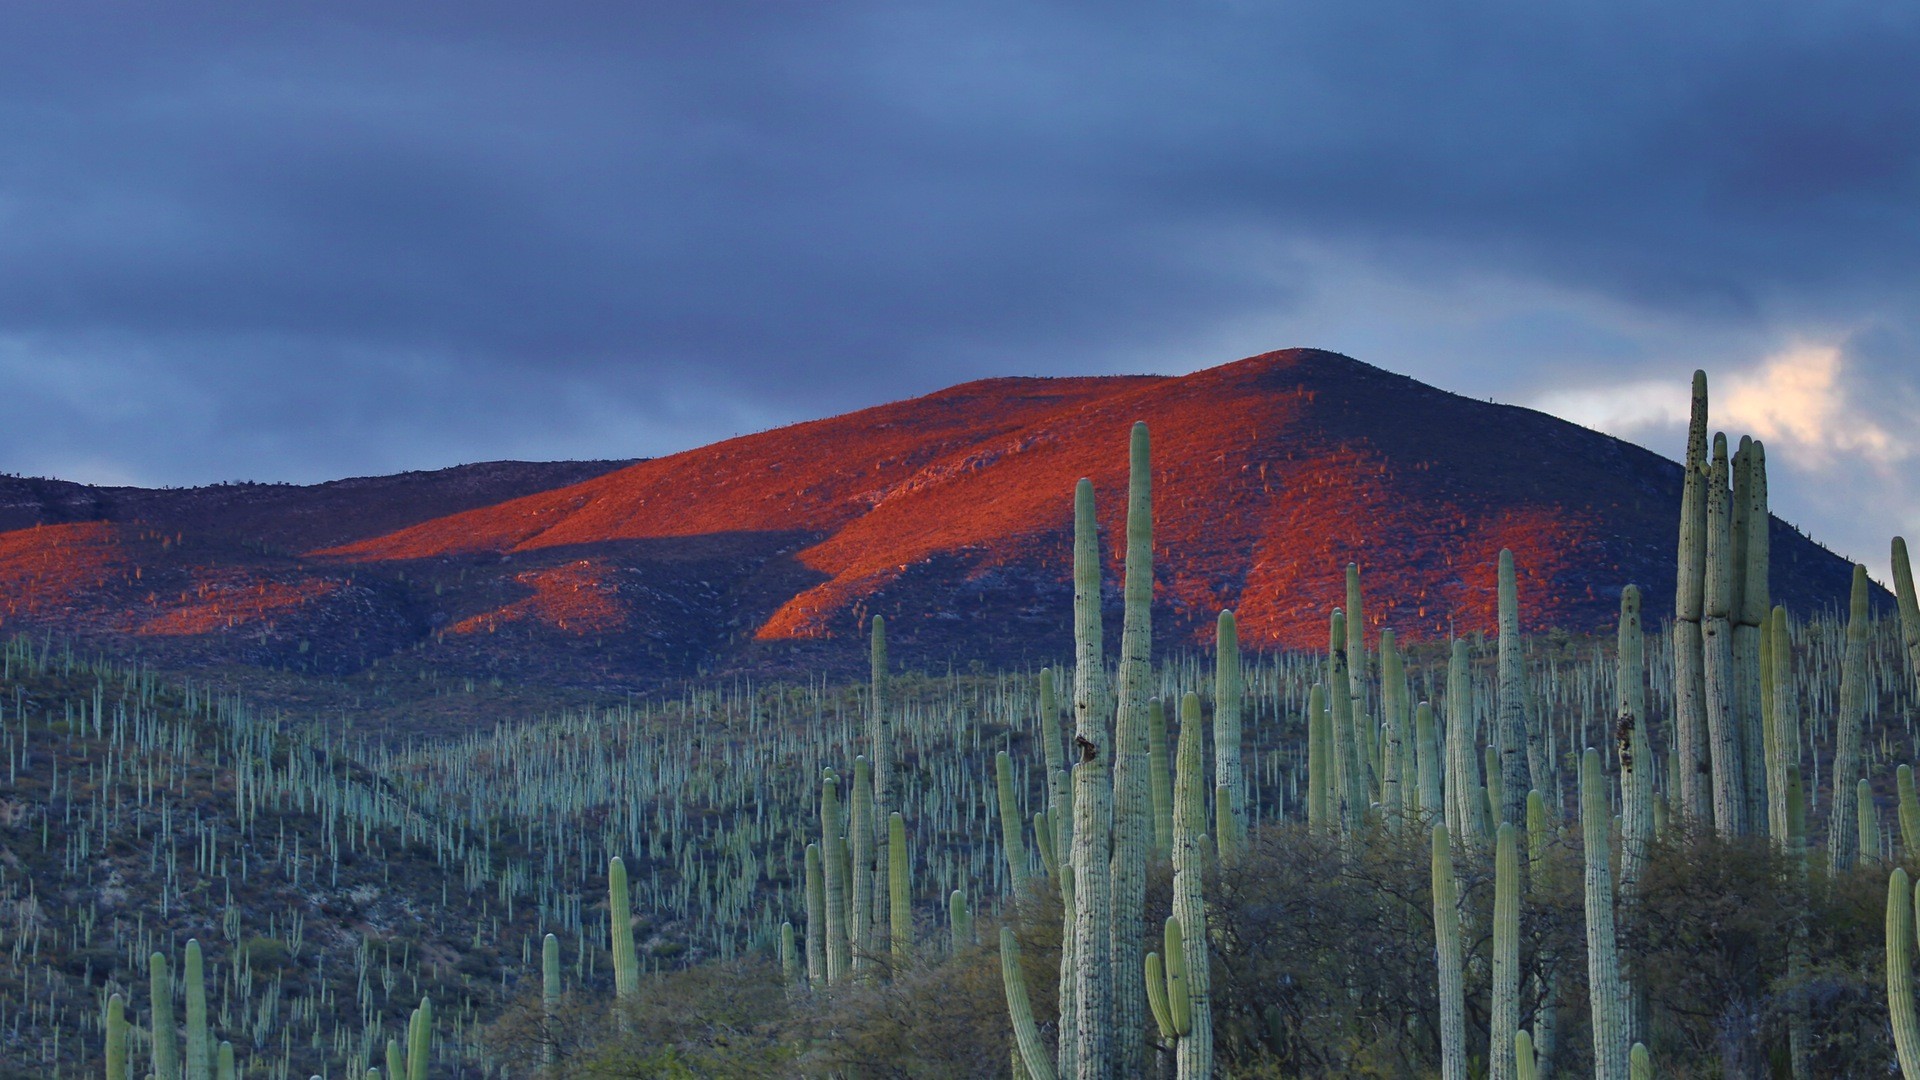 General 1920x1080 nature landscape clouds Mexico cactus field hills evening mountains plants